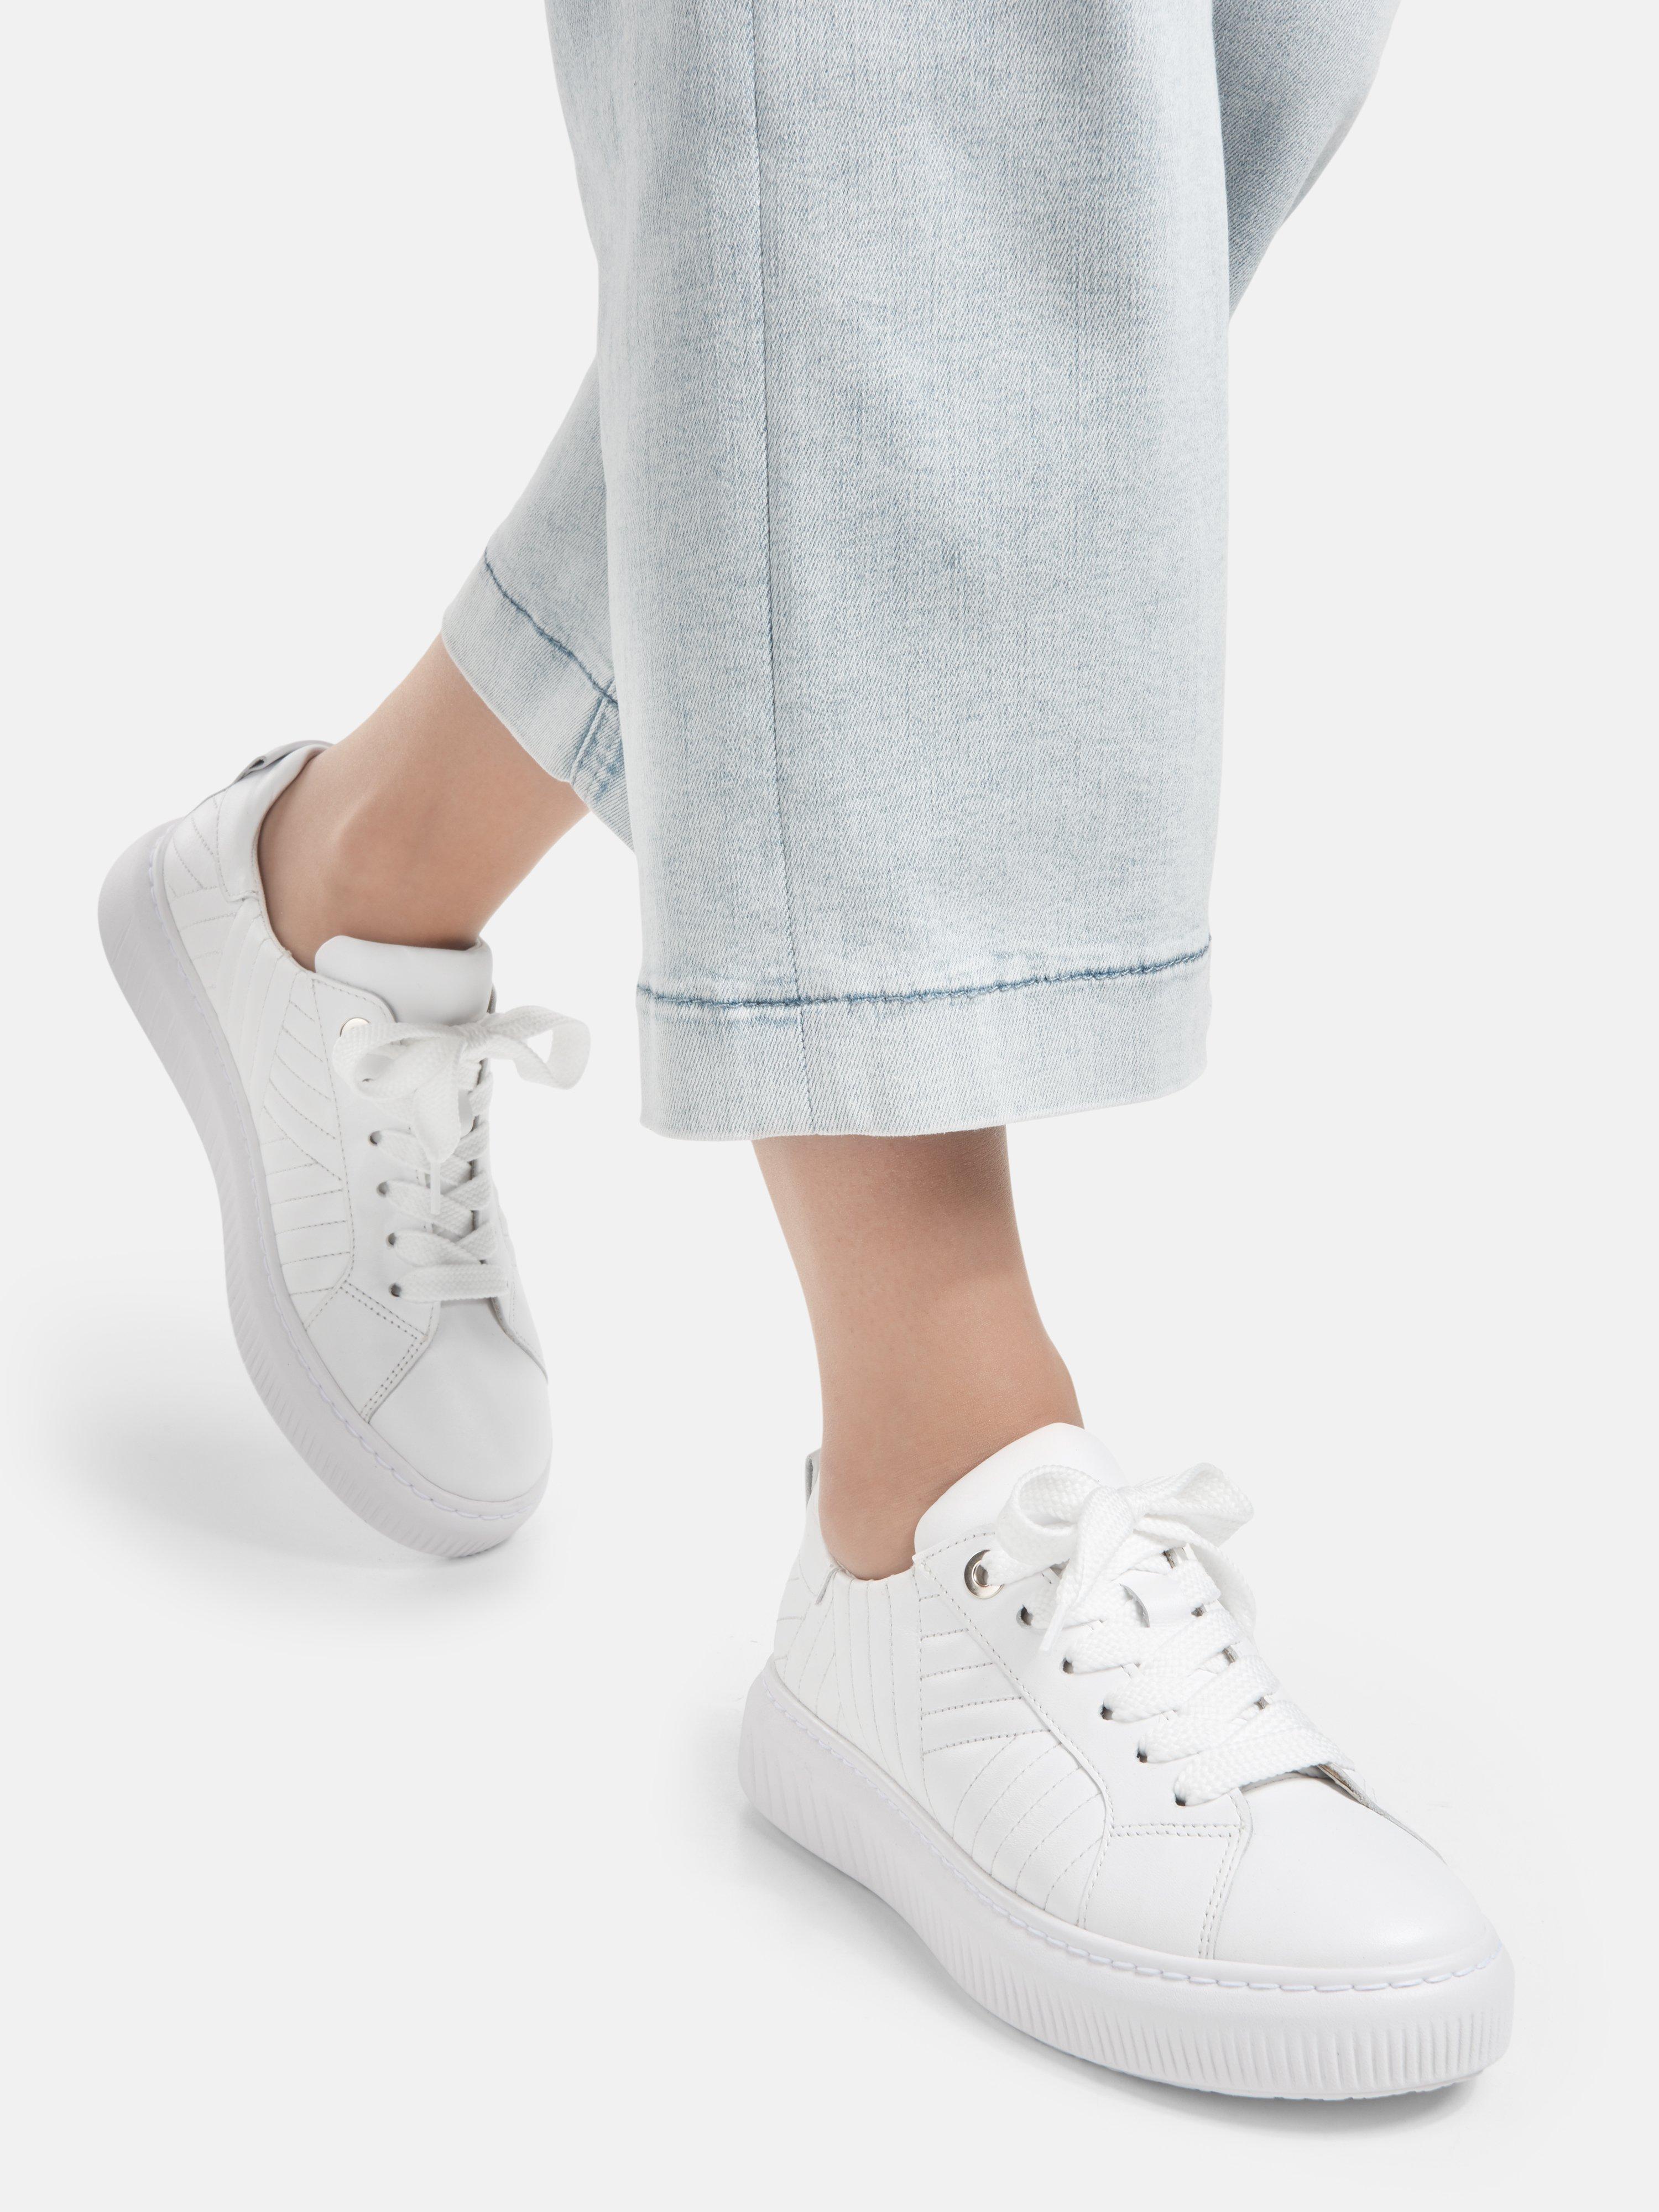 Mentalt Udstyr span Gabor Comfort - Sneakers i trendy vatteret-look - Hvid